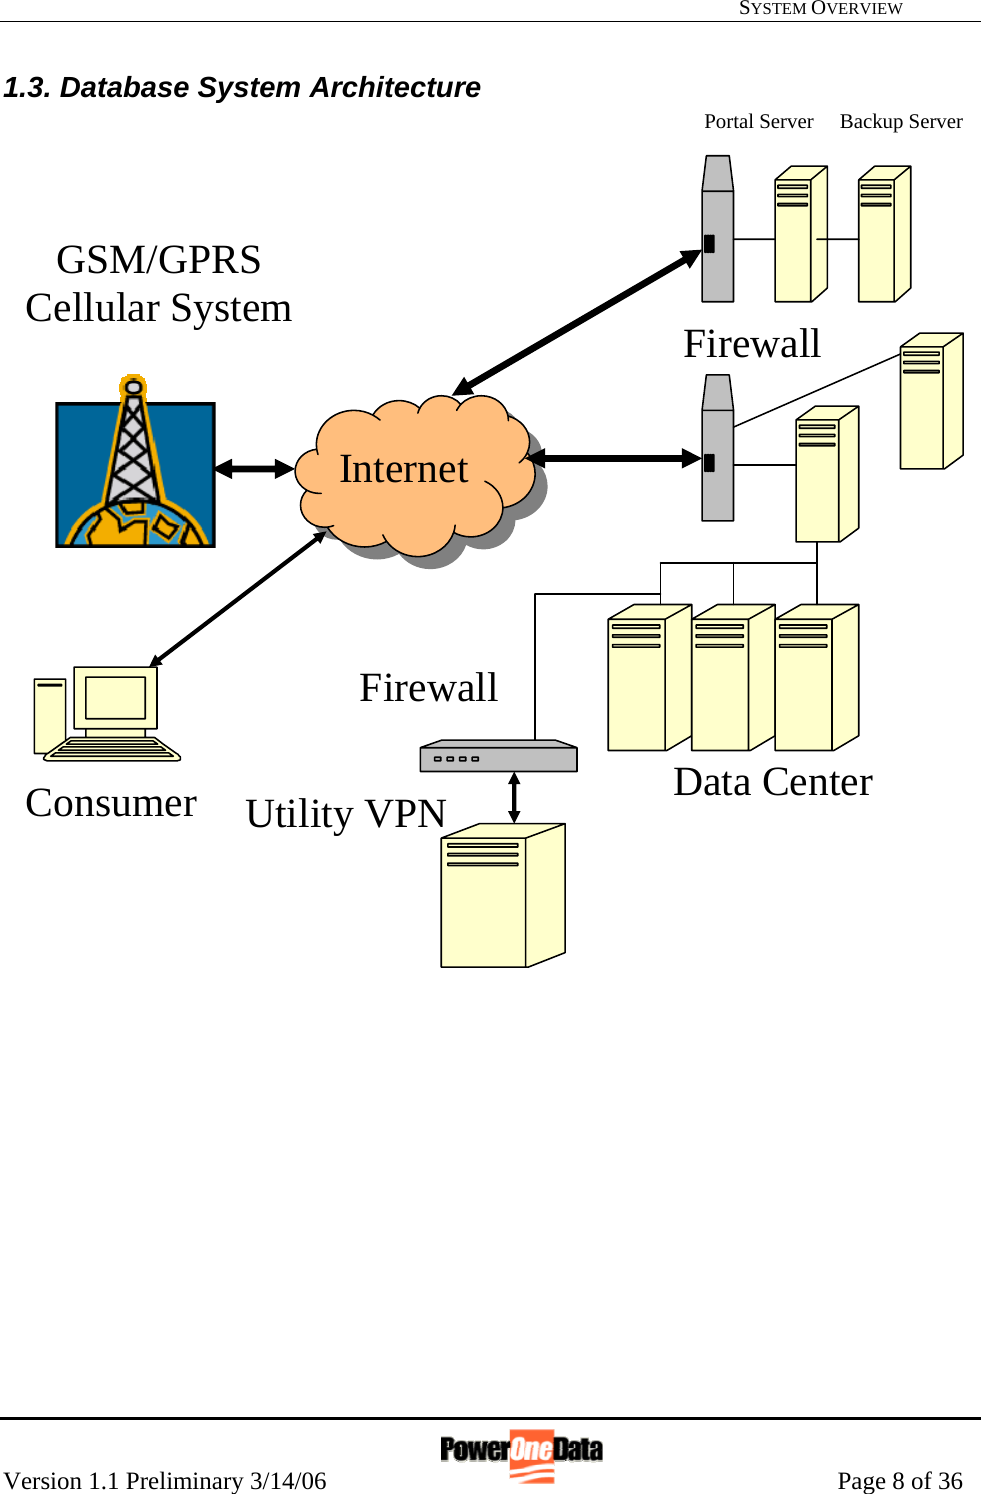   SYSTEM OVERVIEW Version 1.1 Preliminary 3/14/06                                                      Page 8 of 36 1.3. Database System Architecture Utility VPNConsumer Firewall Data Center FirewallInternet GSM/GPRS Cellular System Backup Server Portal Server 